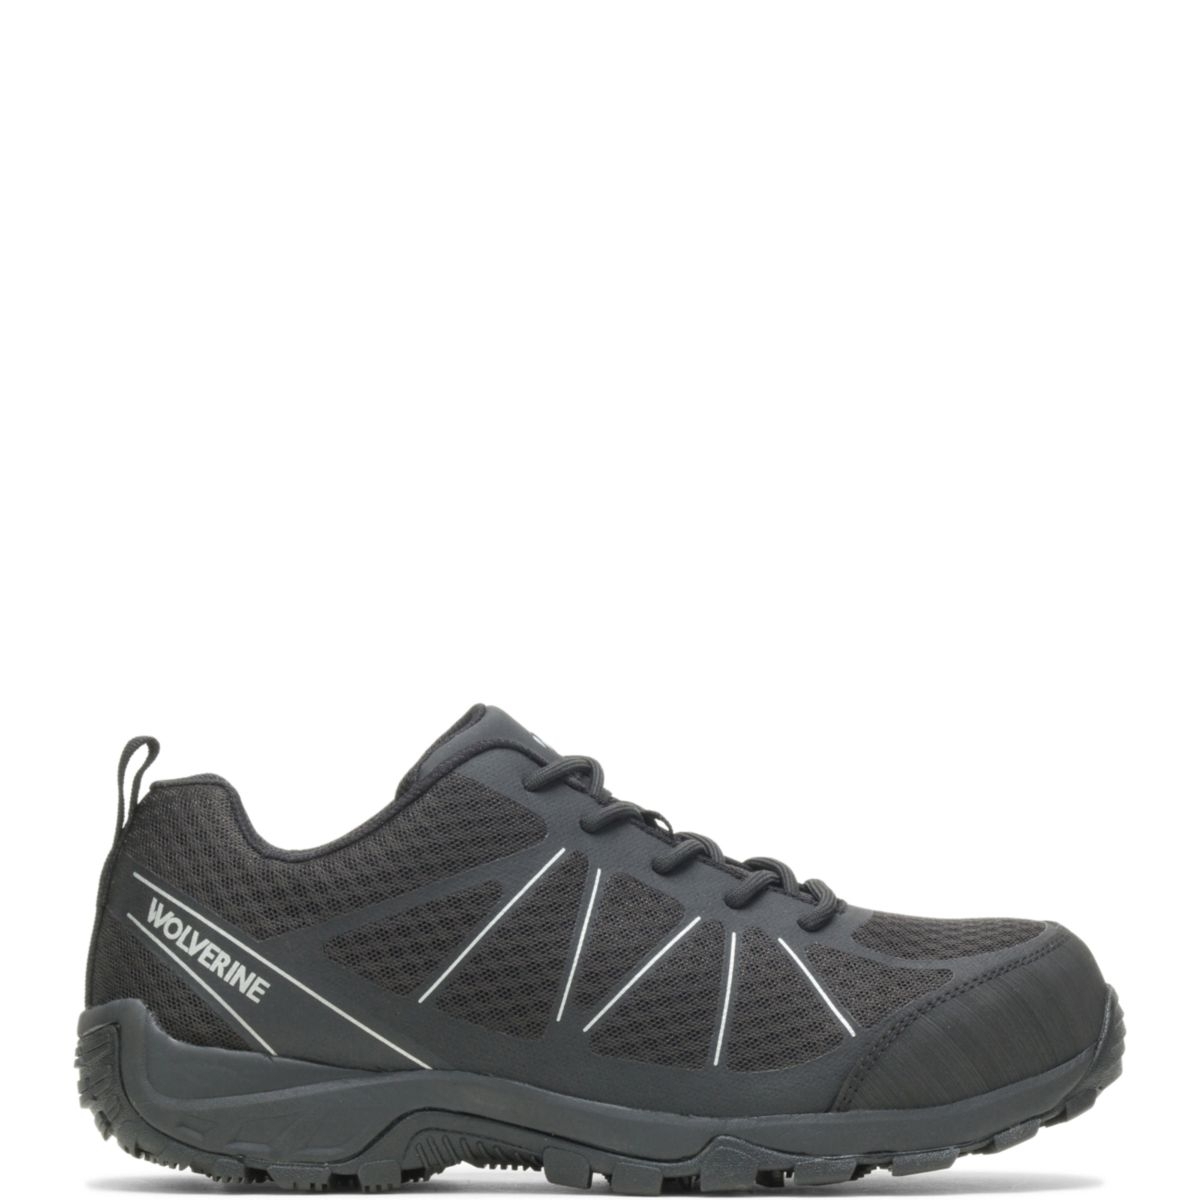 WOLVERINE Men's Amherst II CarbonMAXÂ® Composite Toe Work Shoe Black - W201147 BLACK - BLACK, 8 X-Wide